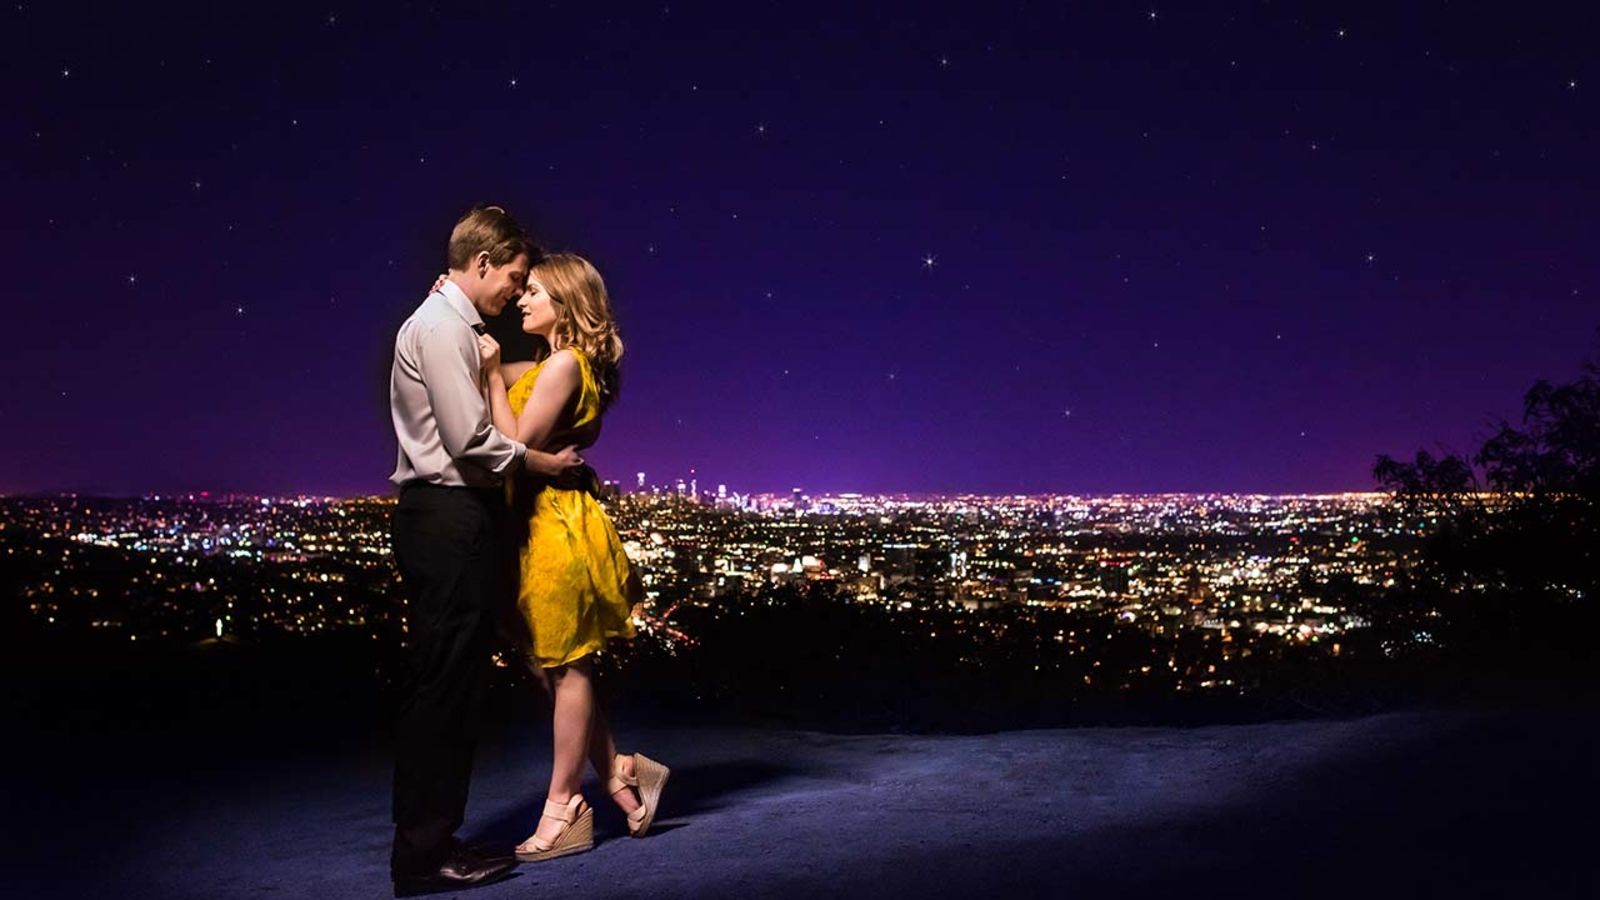 La La Land' engagement photo honor love and Hollywood